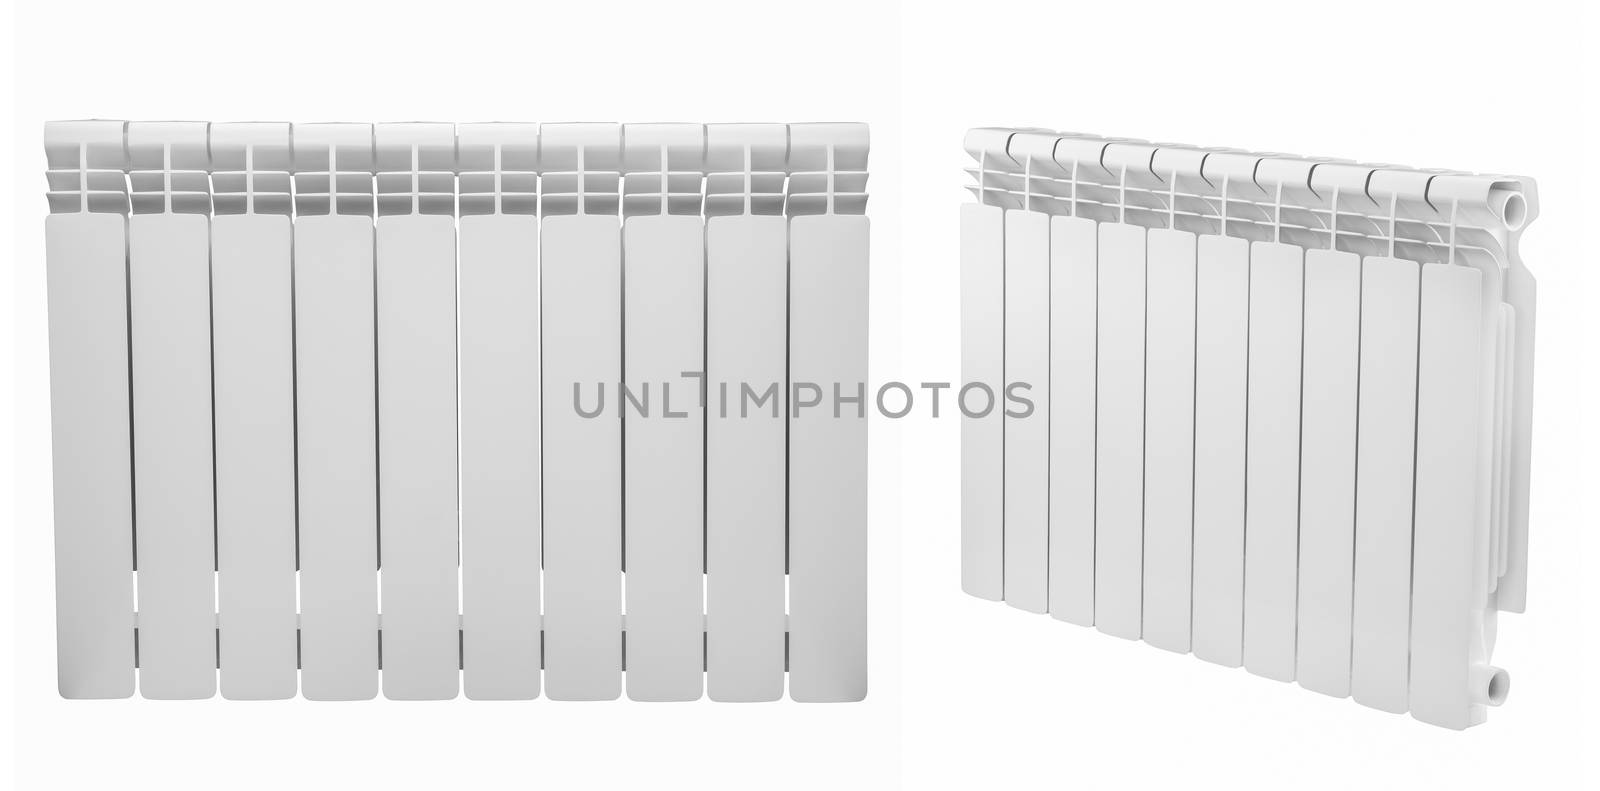 modern radiator on white background. household bimetallic batteries from different angles